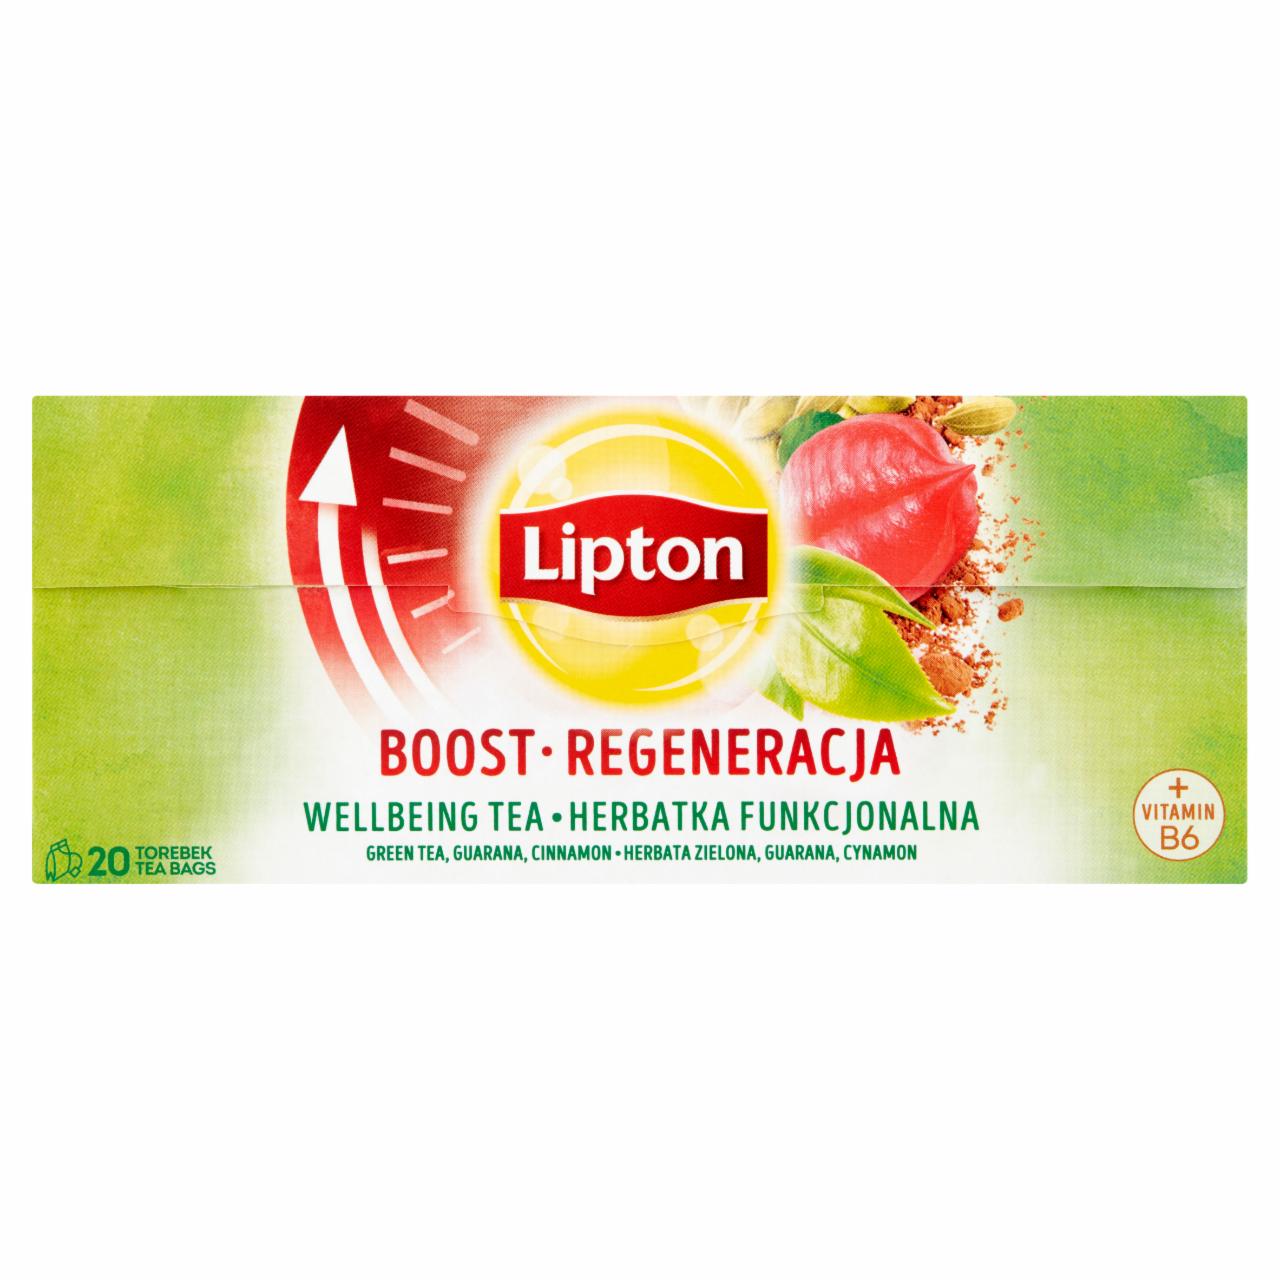 Zdjęcia - Lipton Regeneracja Herbatka funkcjonalna 32 g (20 torebek)